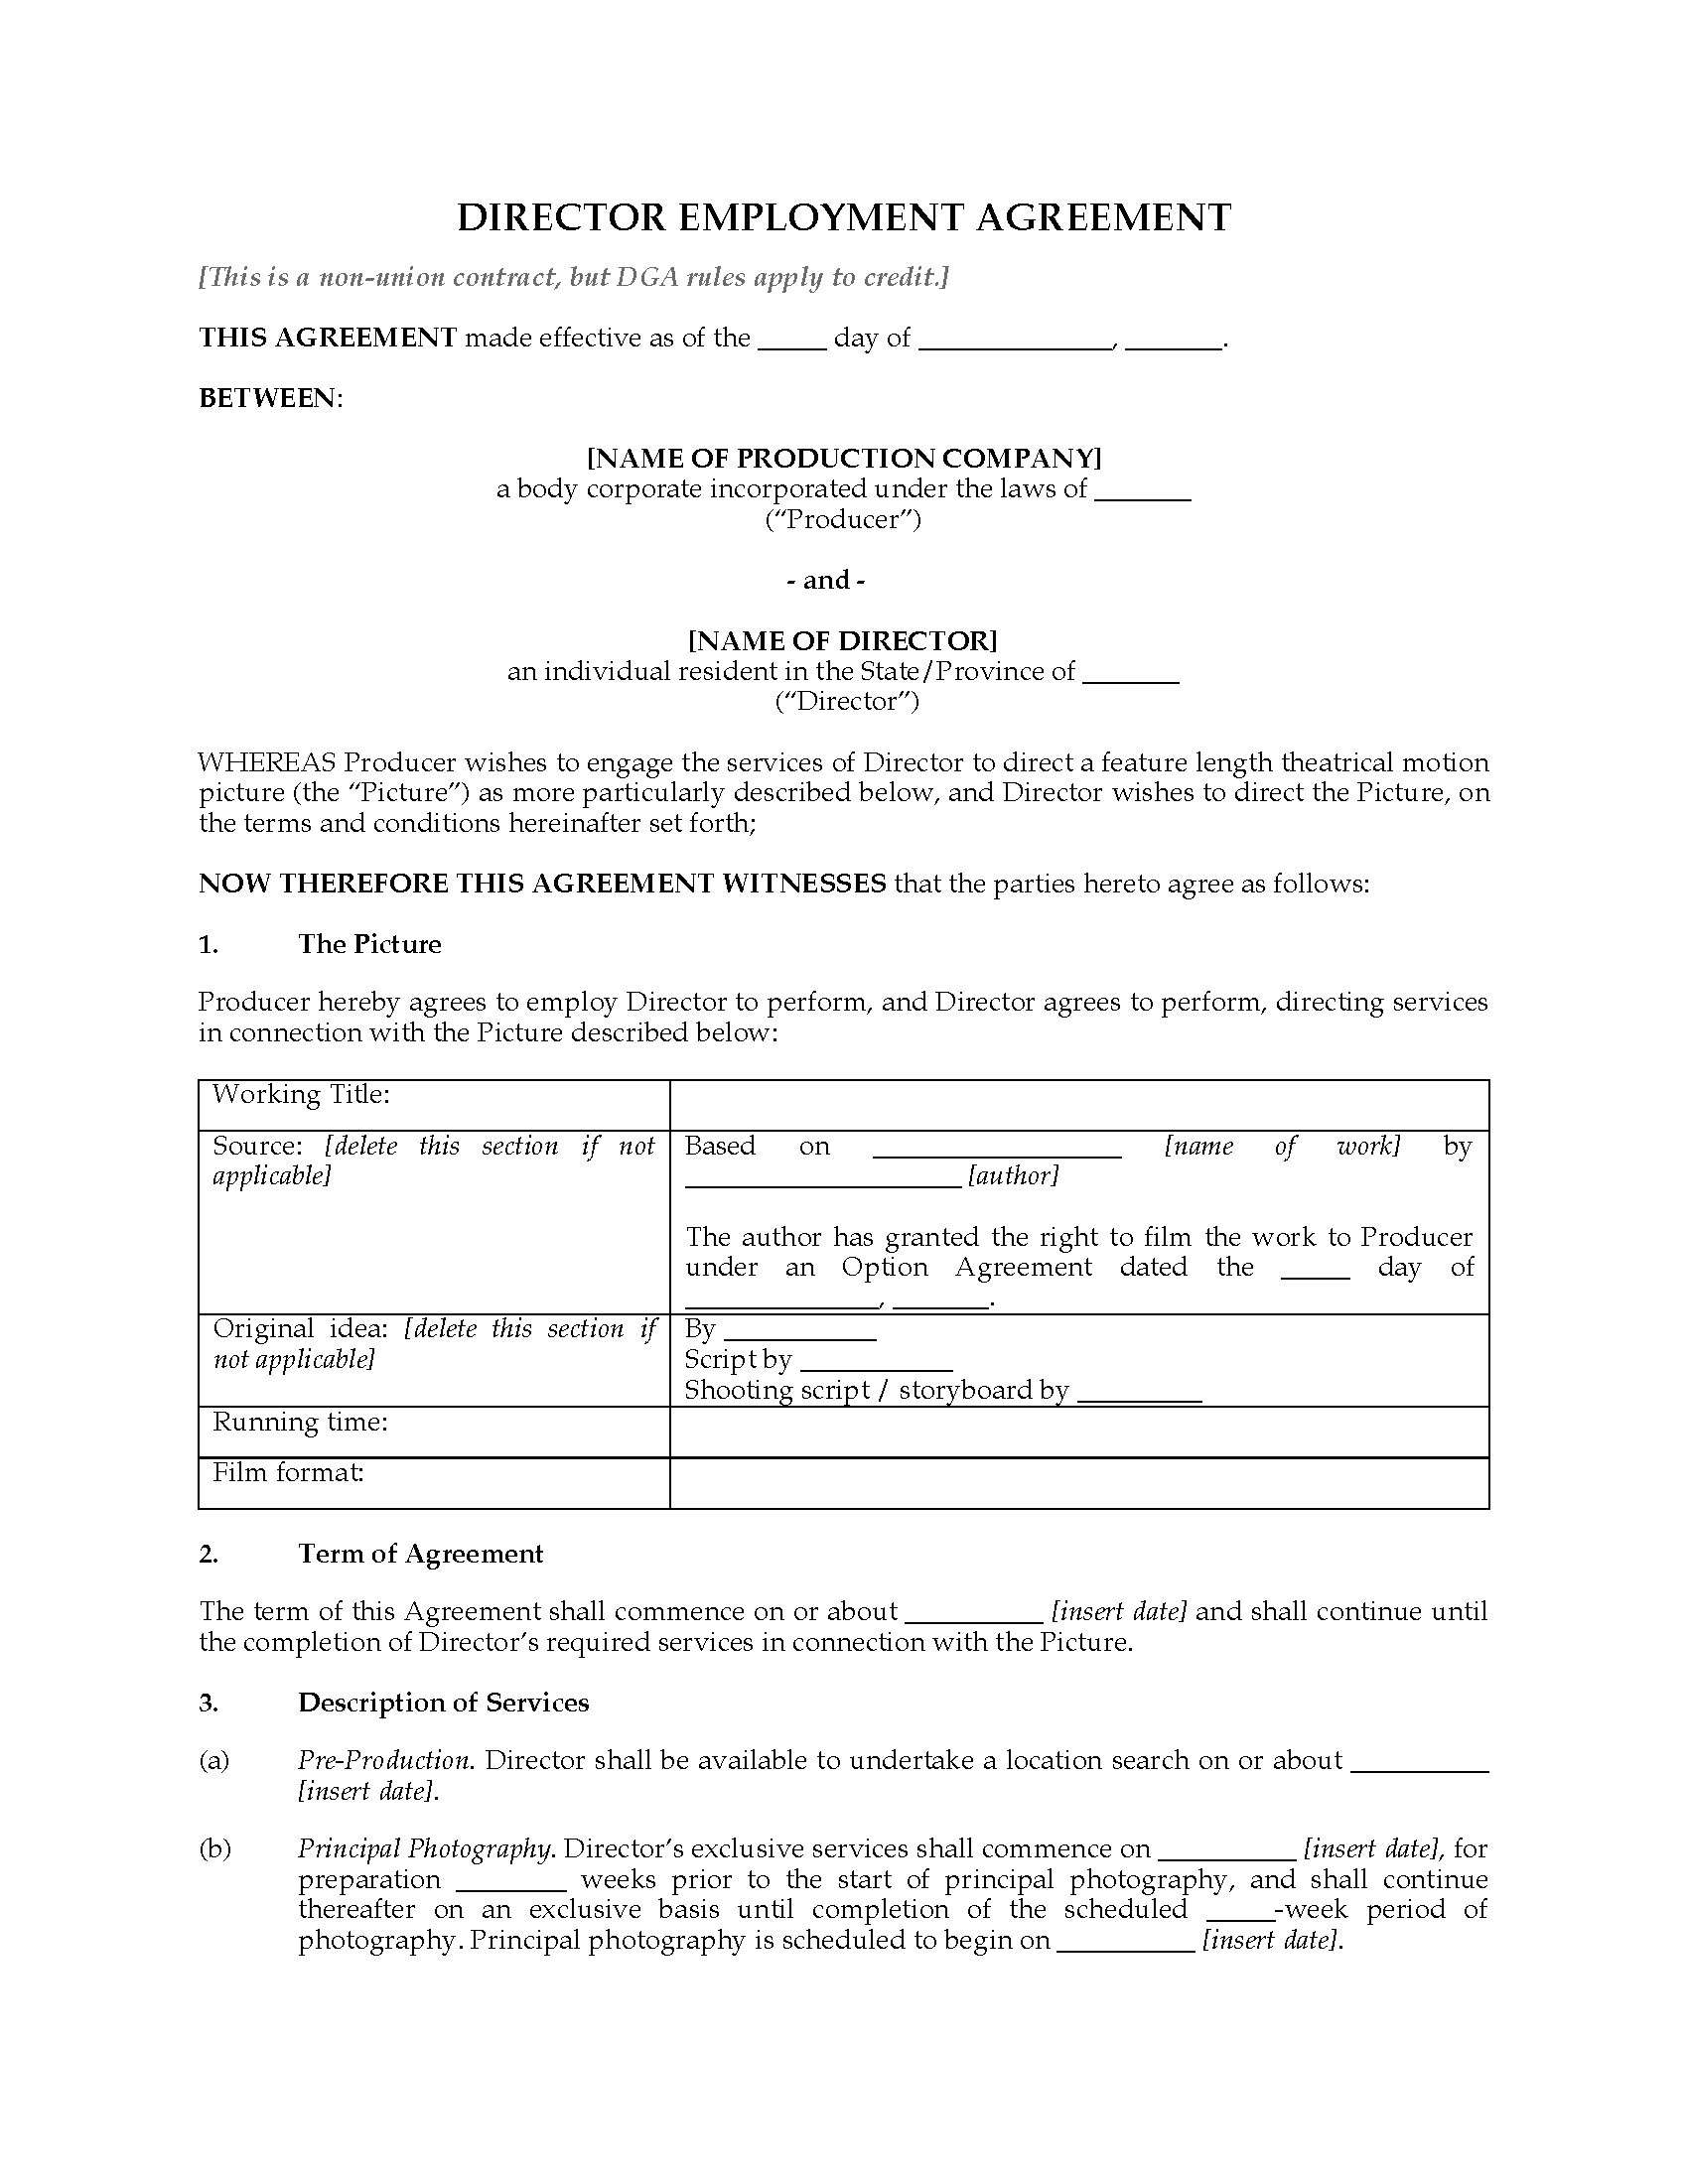 director employment agreement non union